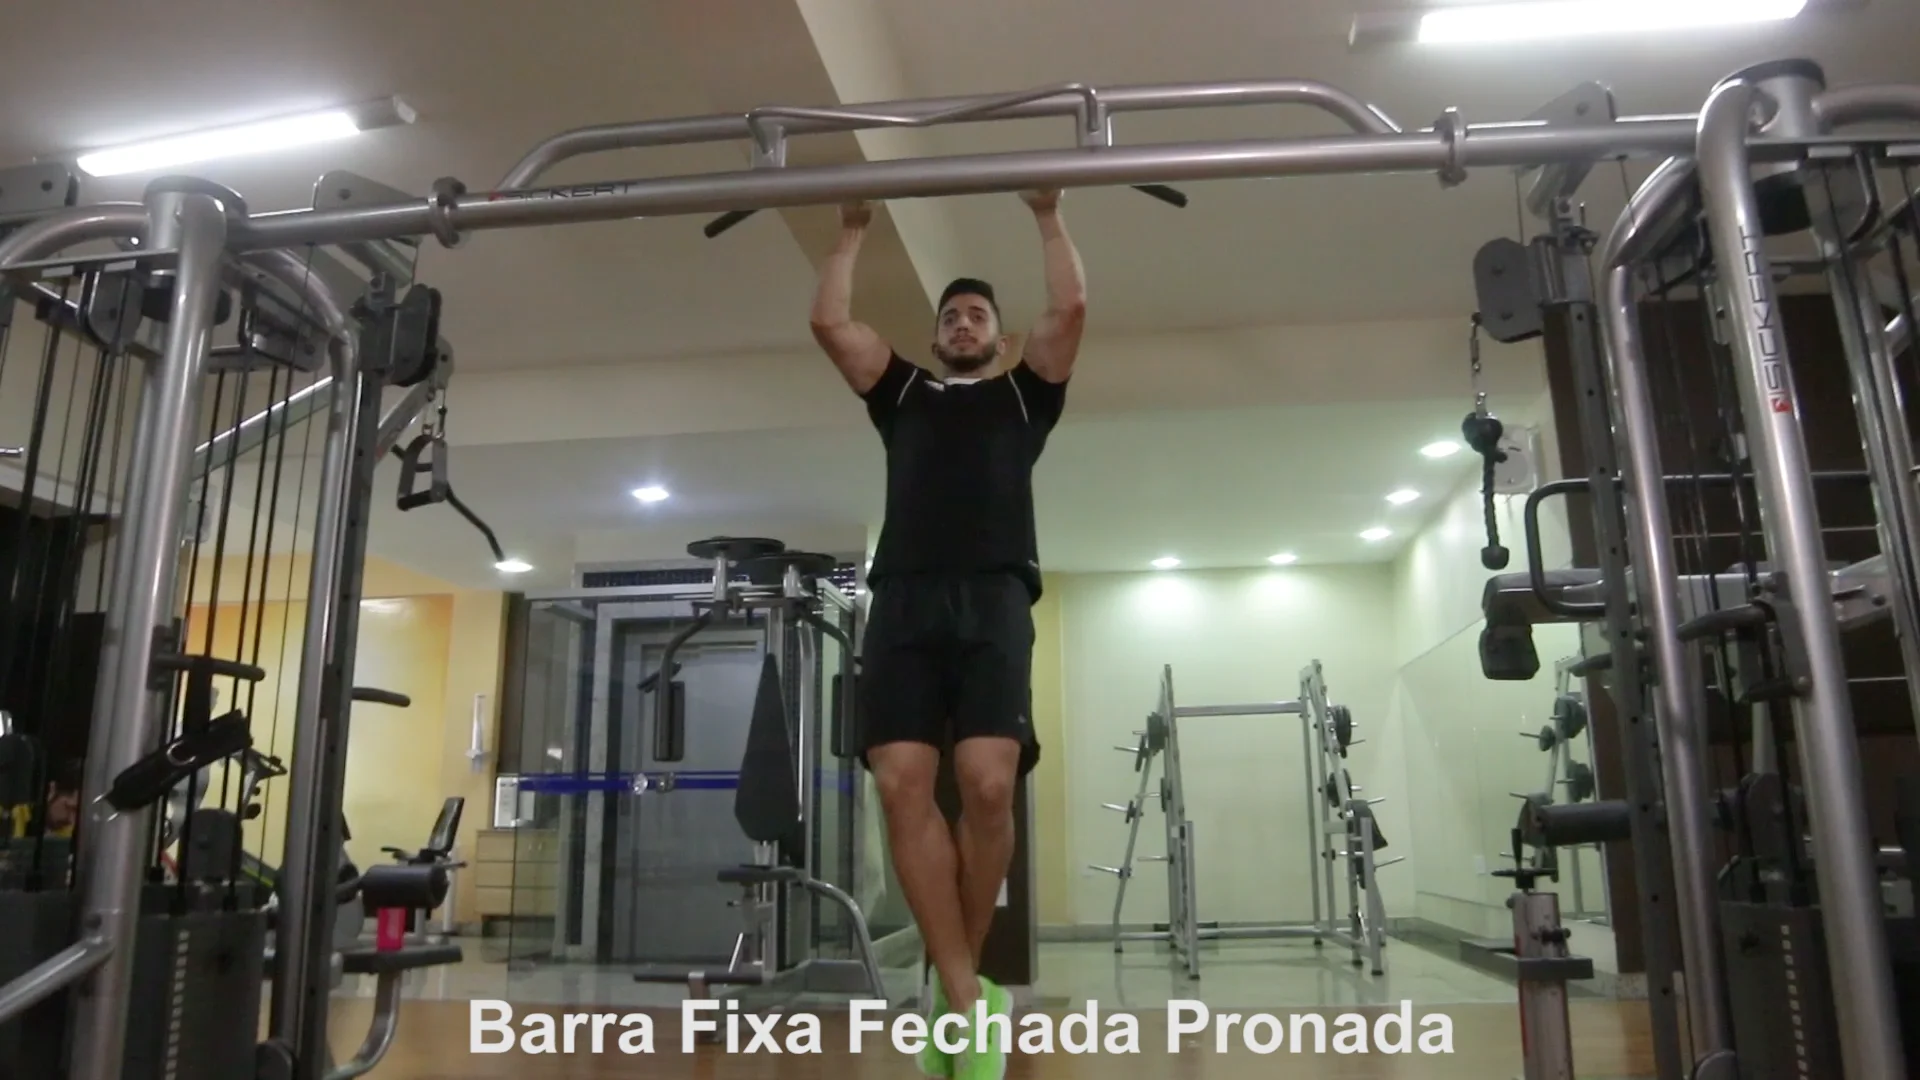 Barra Fixa Fechada Pronada on Vimeo